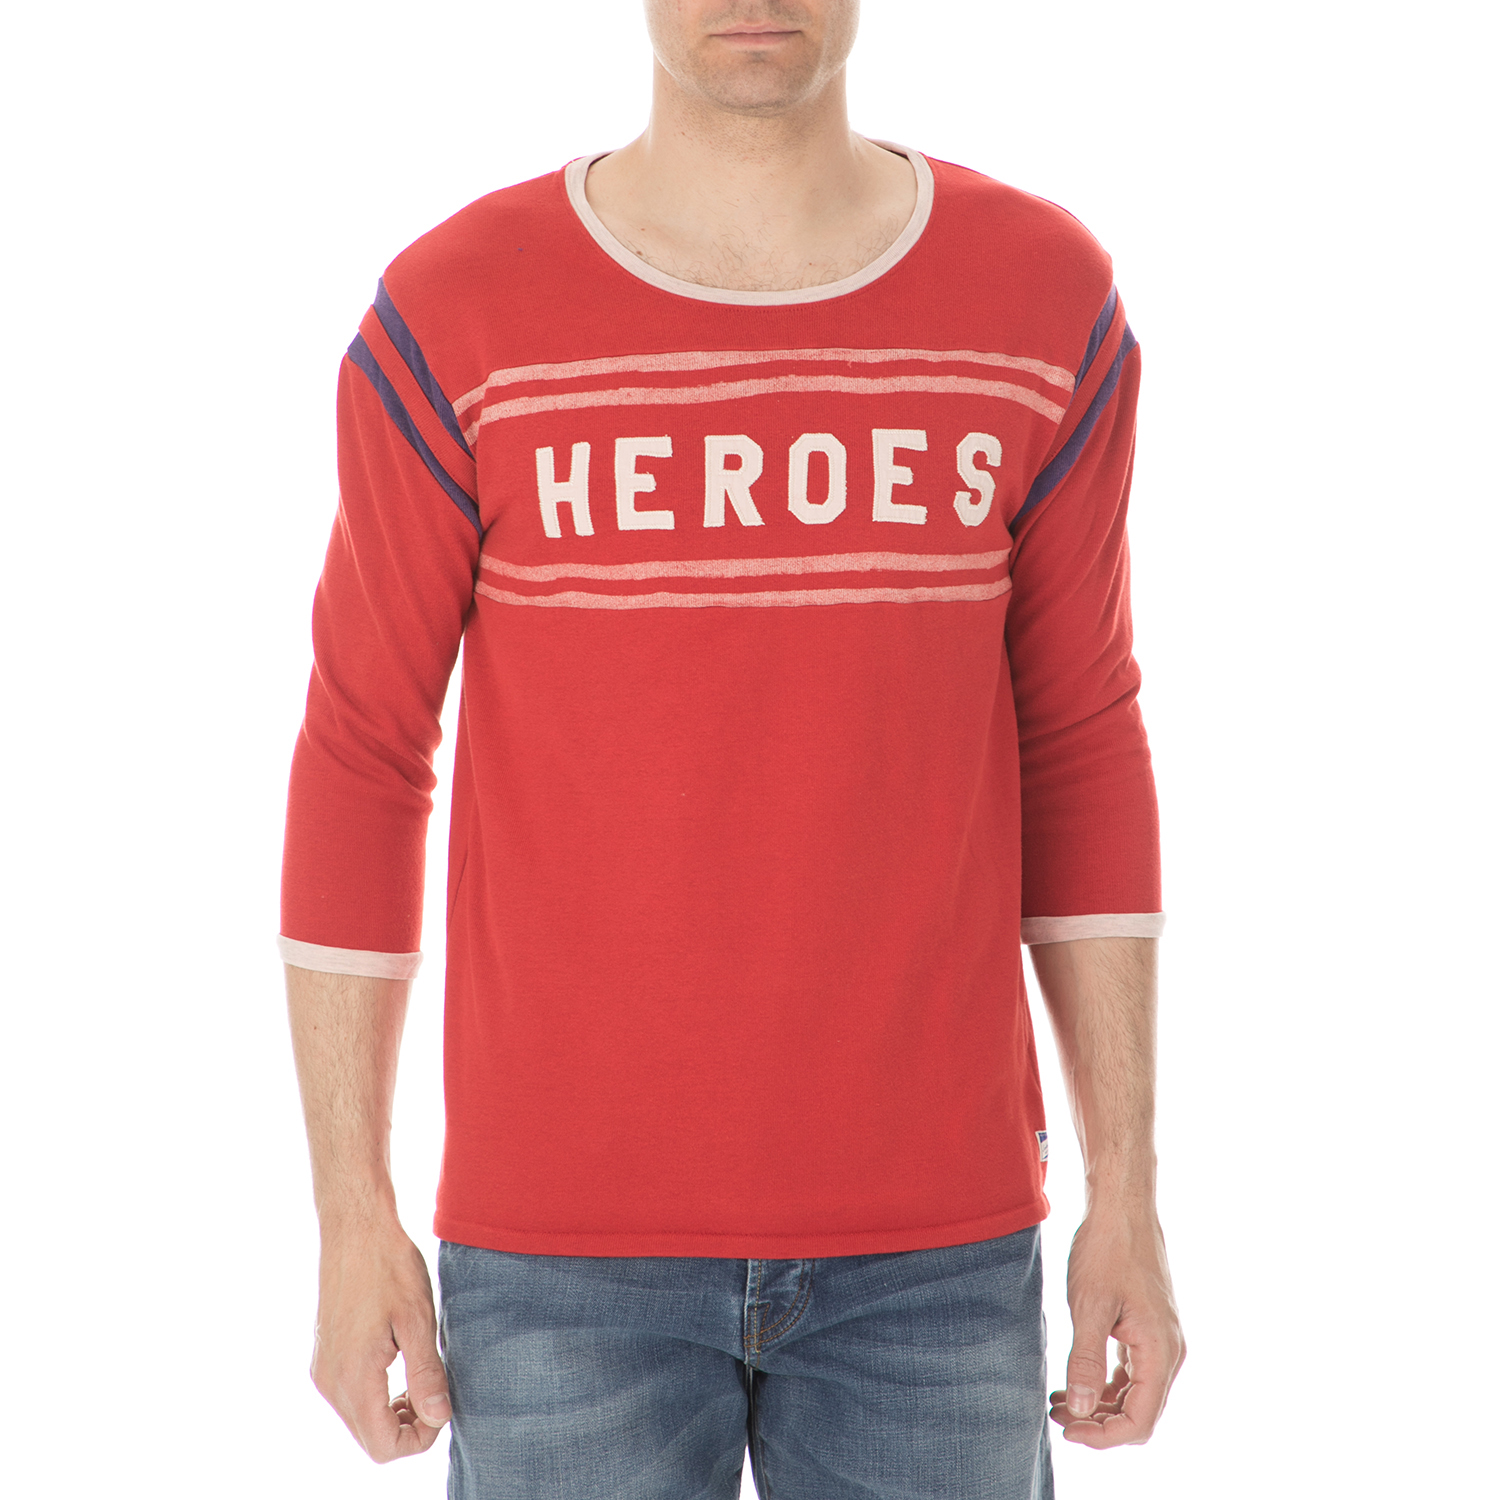 SCOTCH & SODA - Ανδρική μπλούζα με τρουακαρ μανίκι SCOTCH & SODA κόκκινη Ανδρικά/Ρούχα/Μπλούζες/Μακρυμάνικες